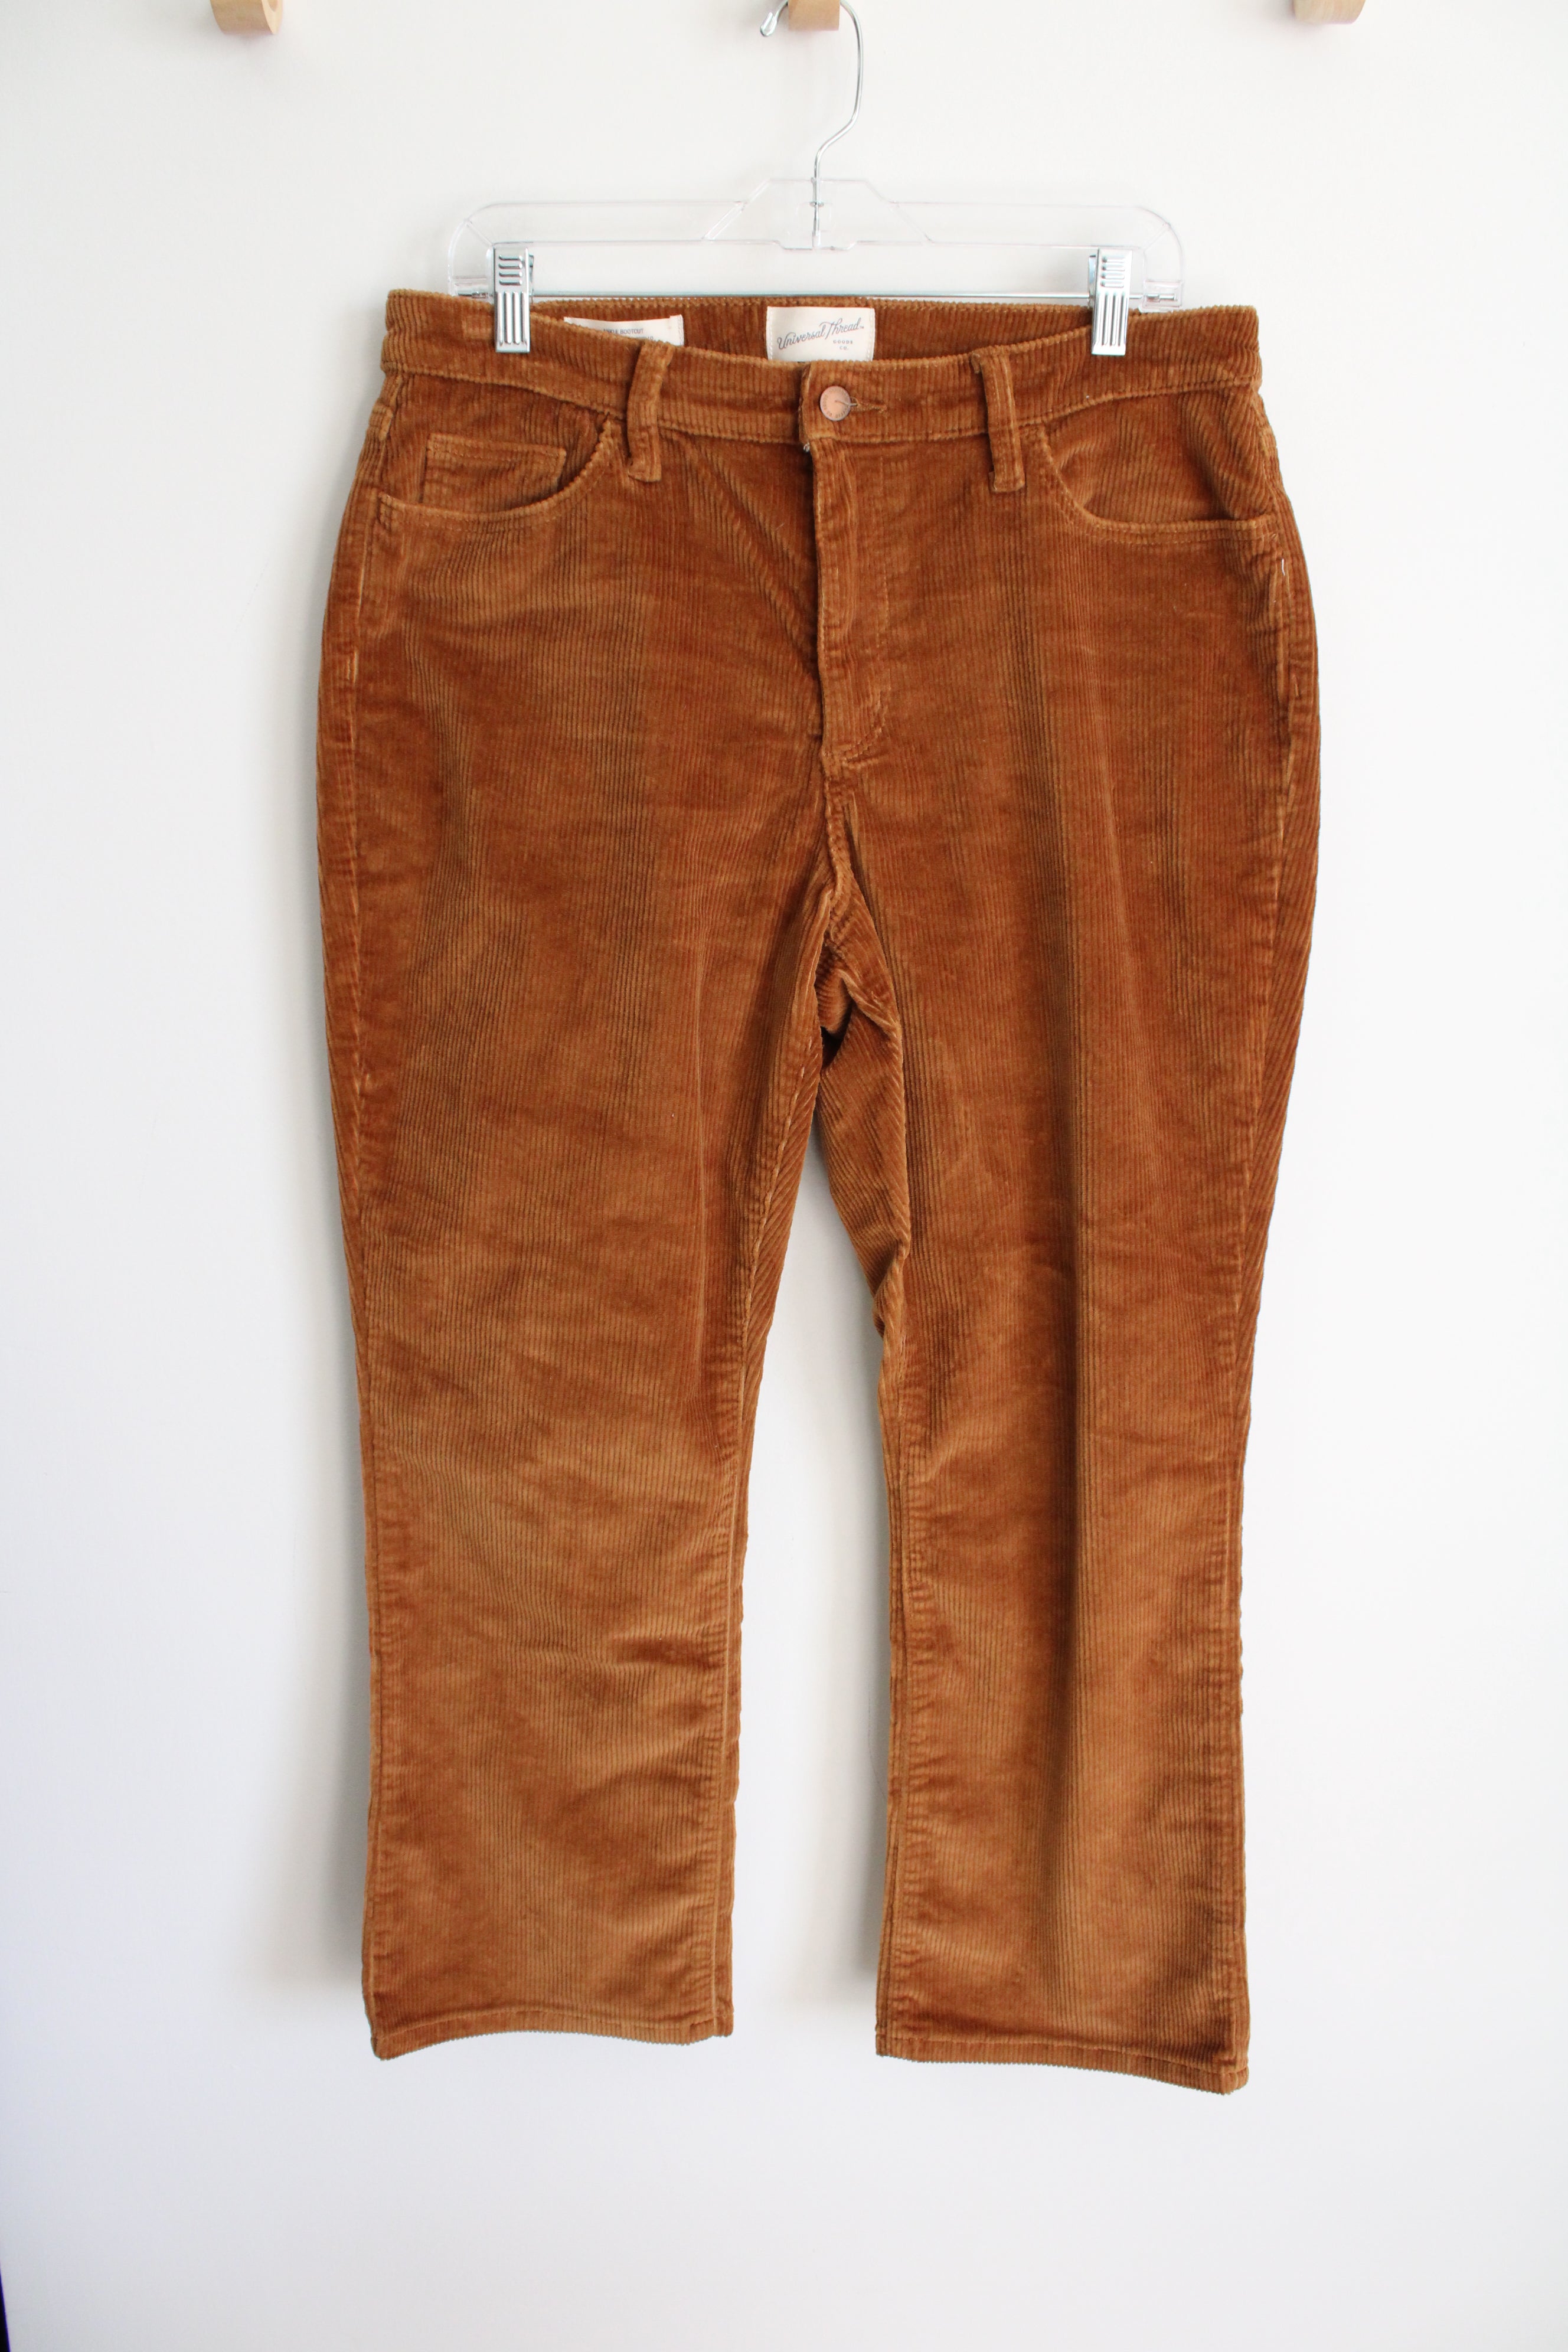 Universal Threads Ankle Bootcut Orange cCorduroy Pants | 12/31R